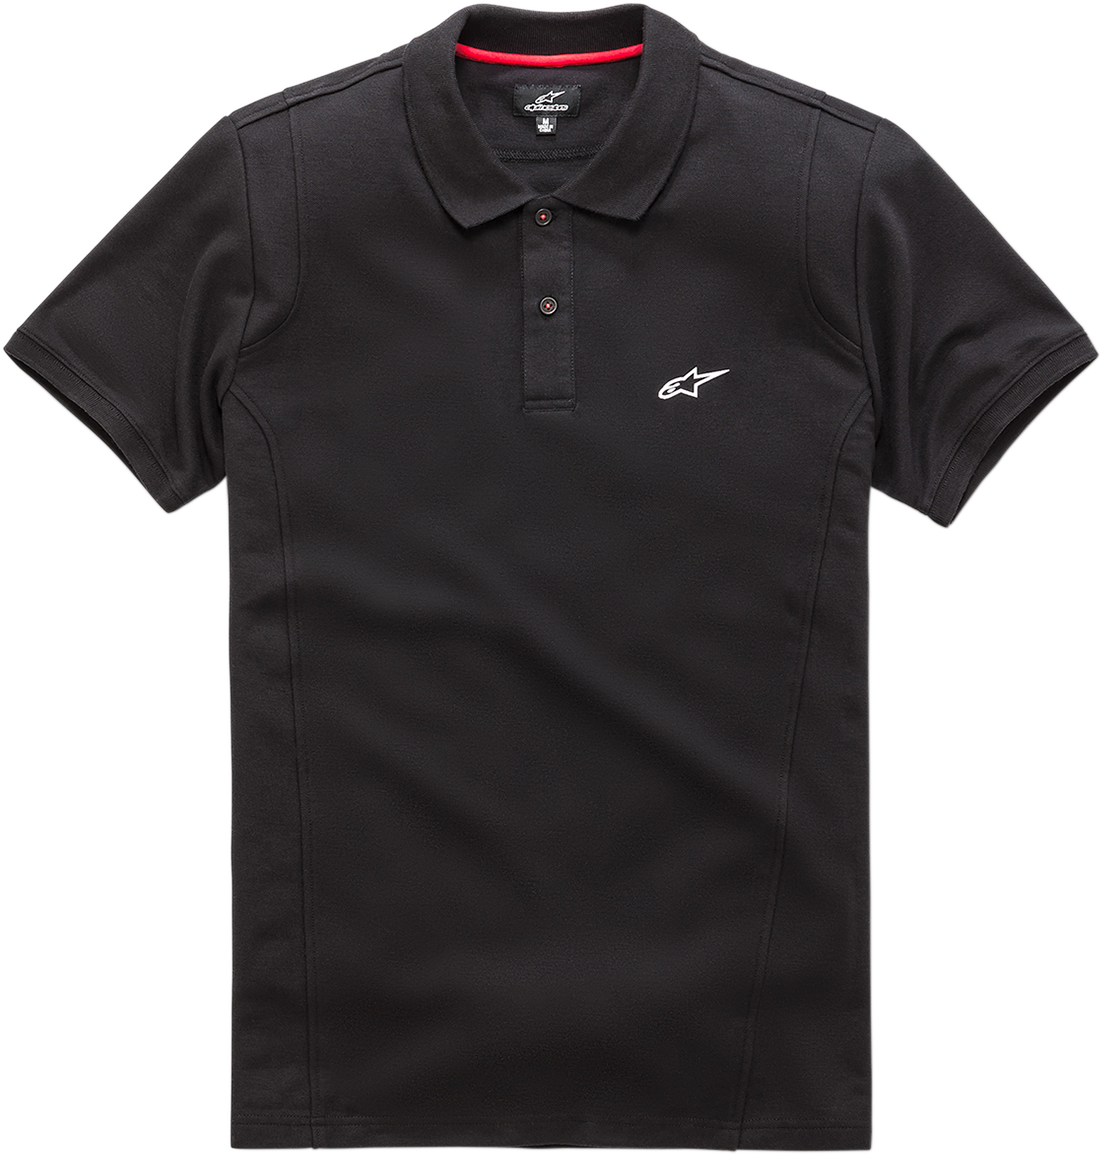 Capital Polo T-Shirt - Black - Medium